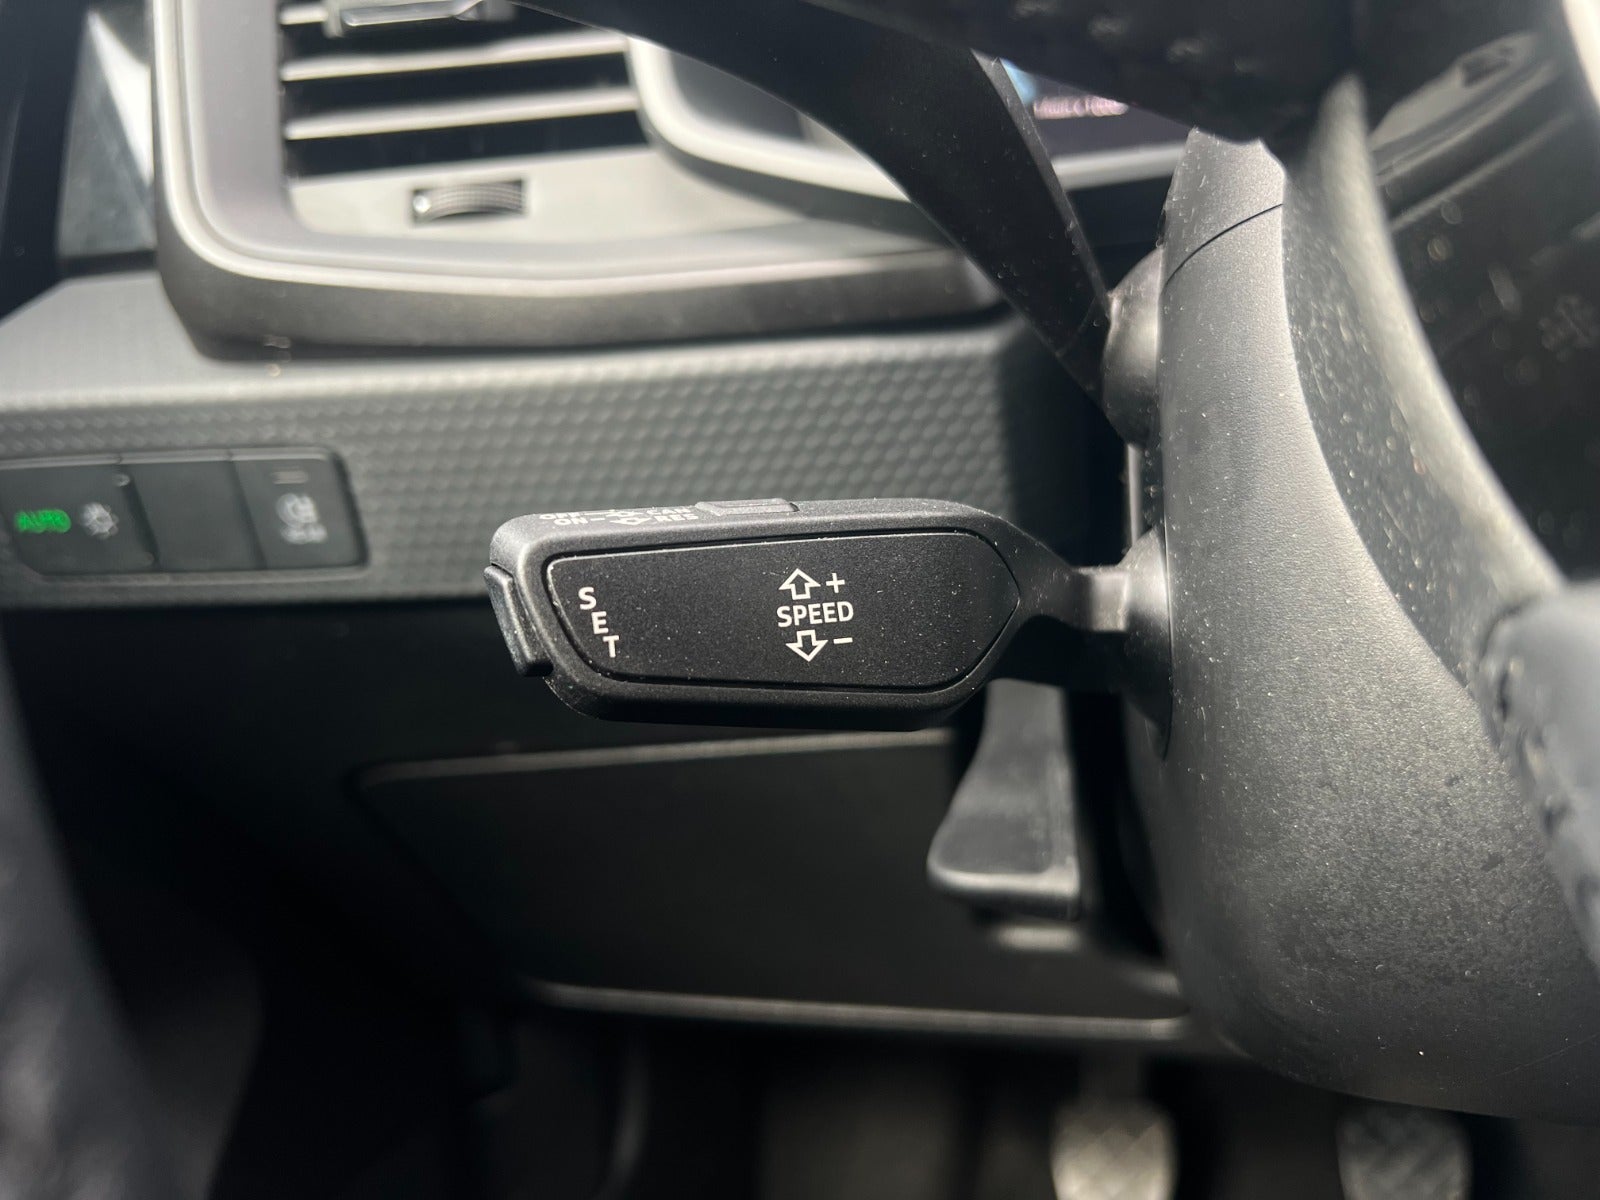 Audi A1 2019